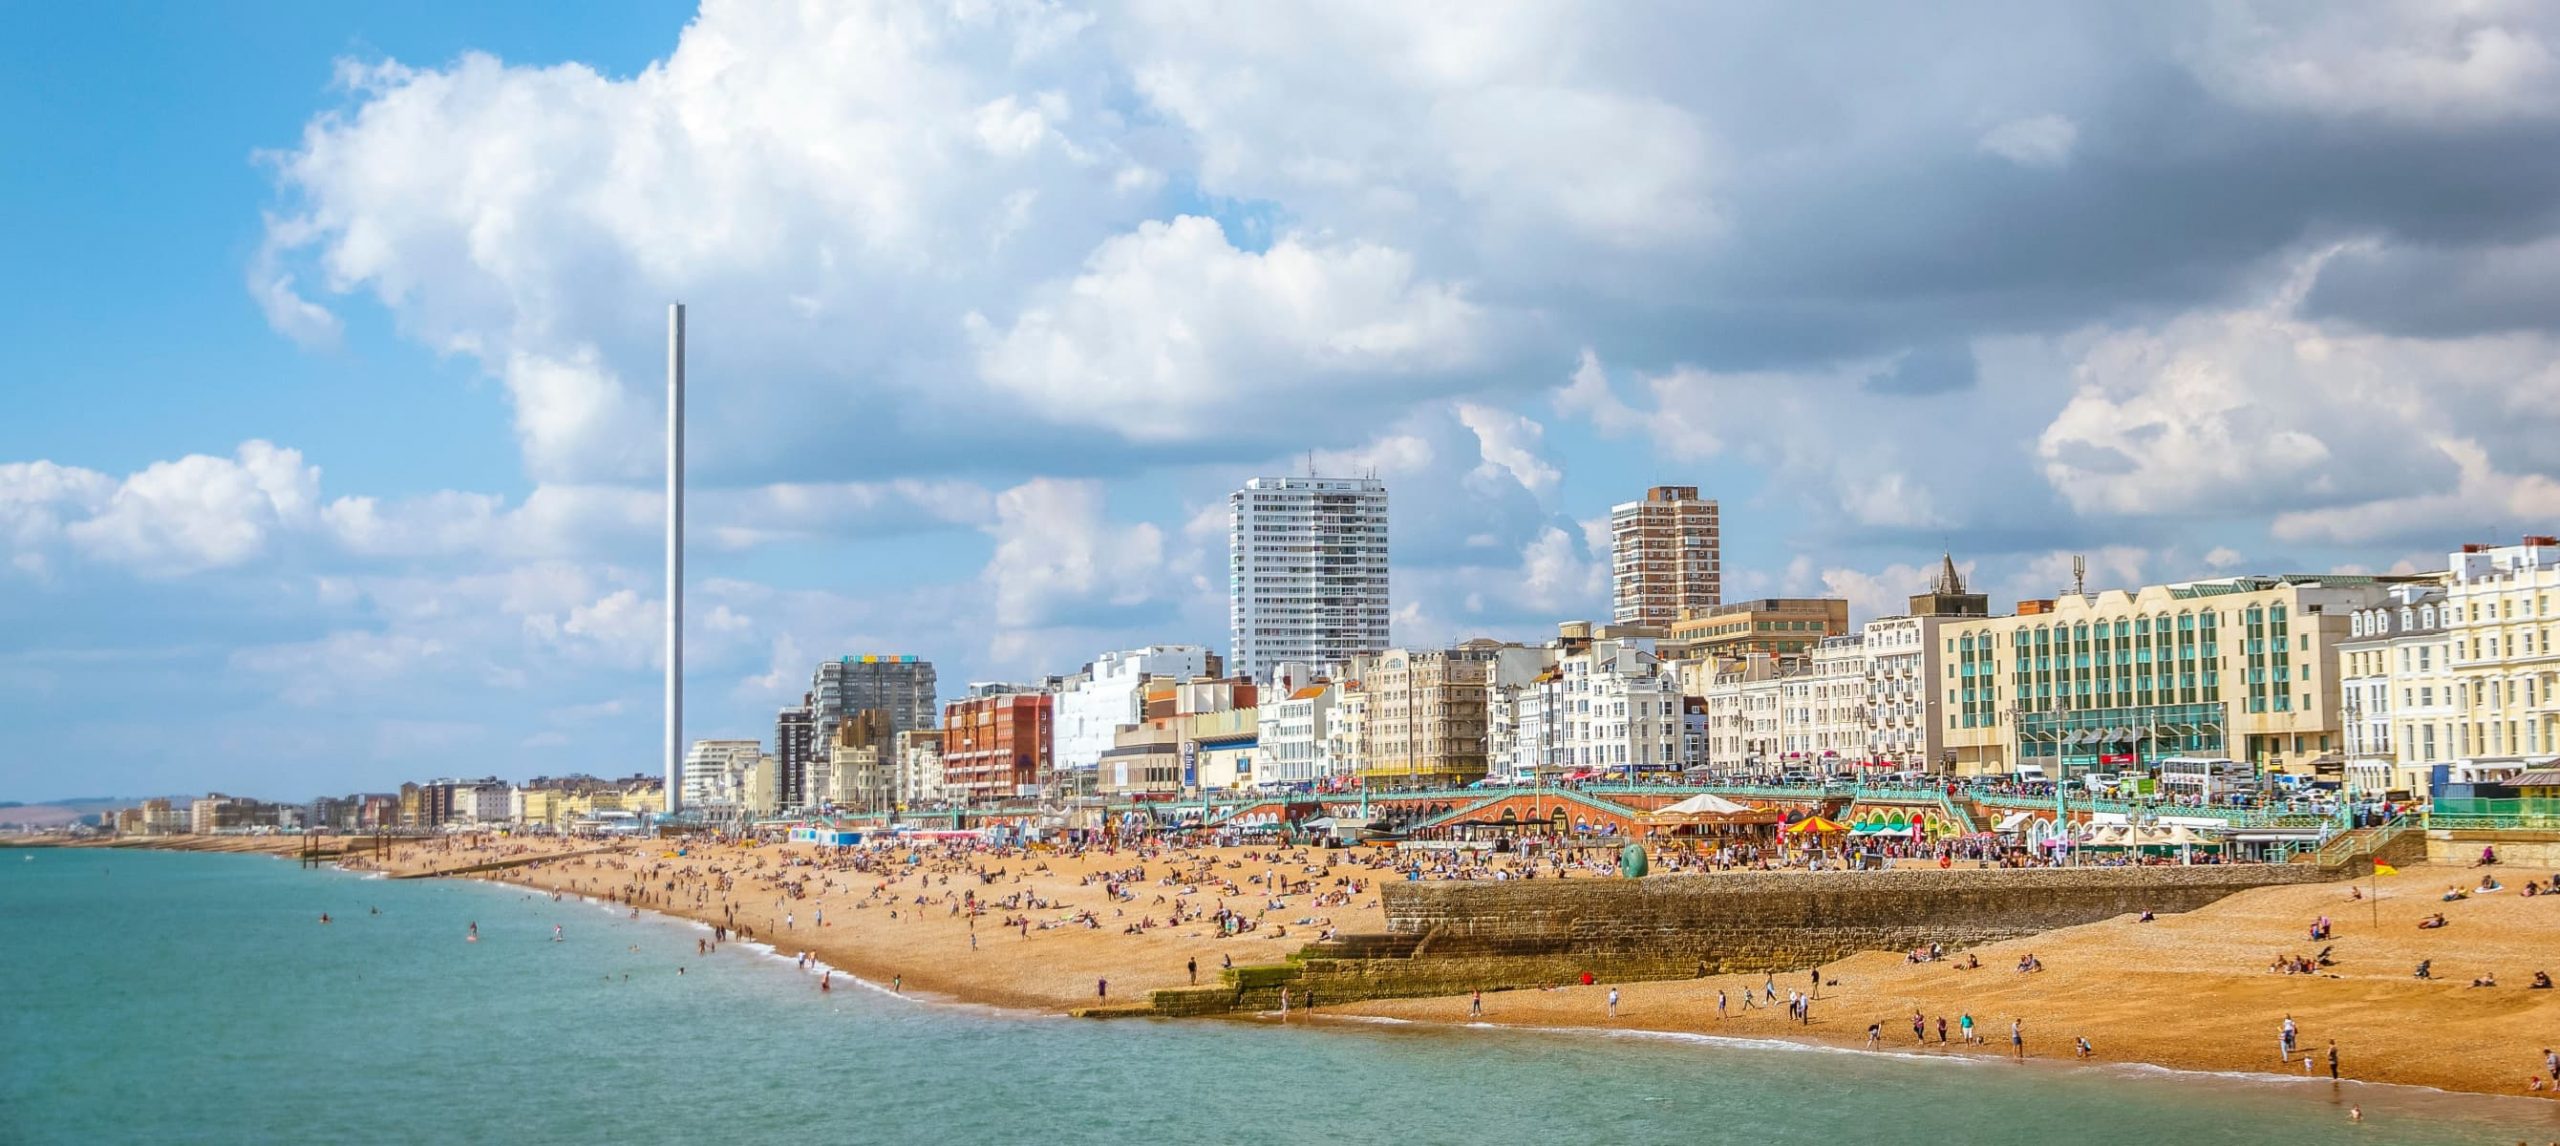 The Best Hotels In Brighton, UK